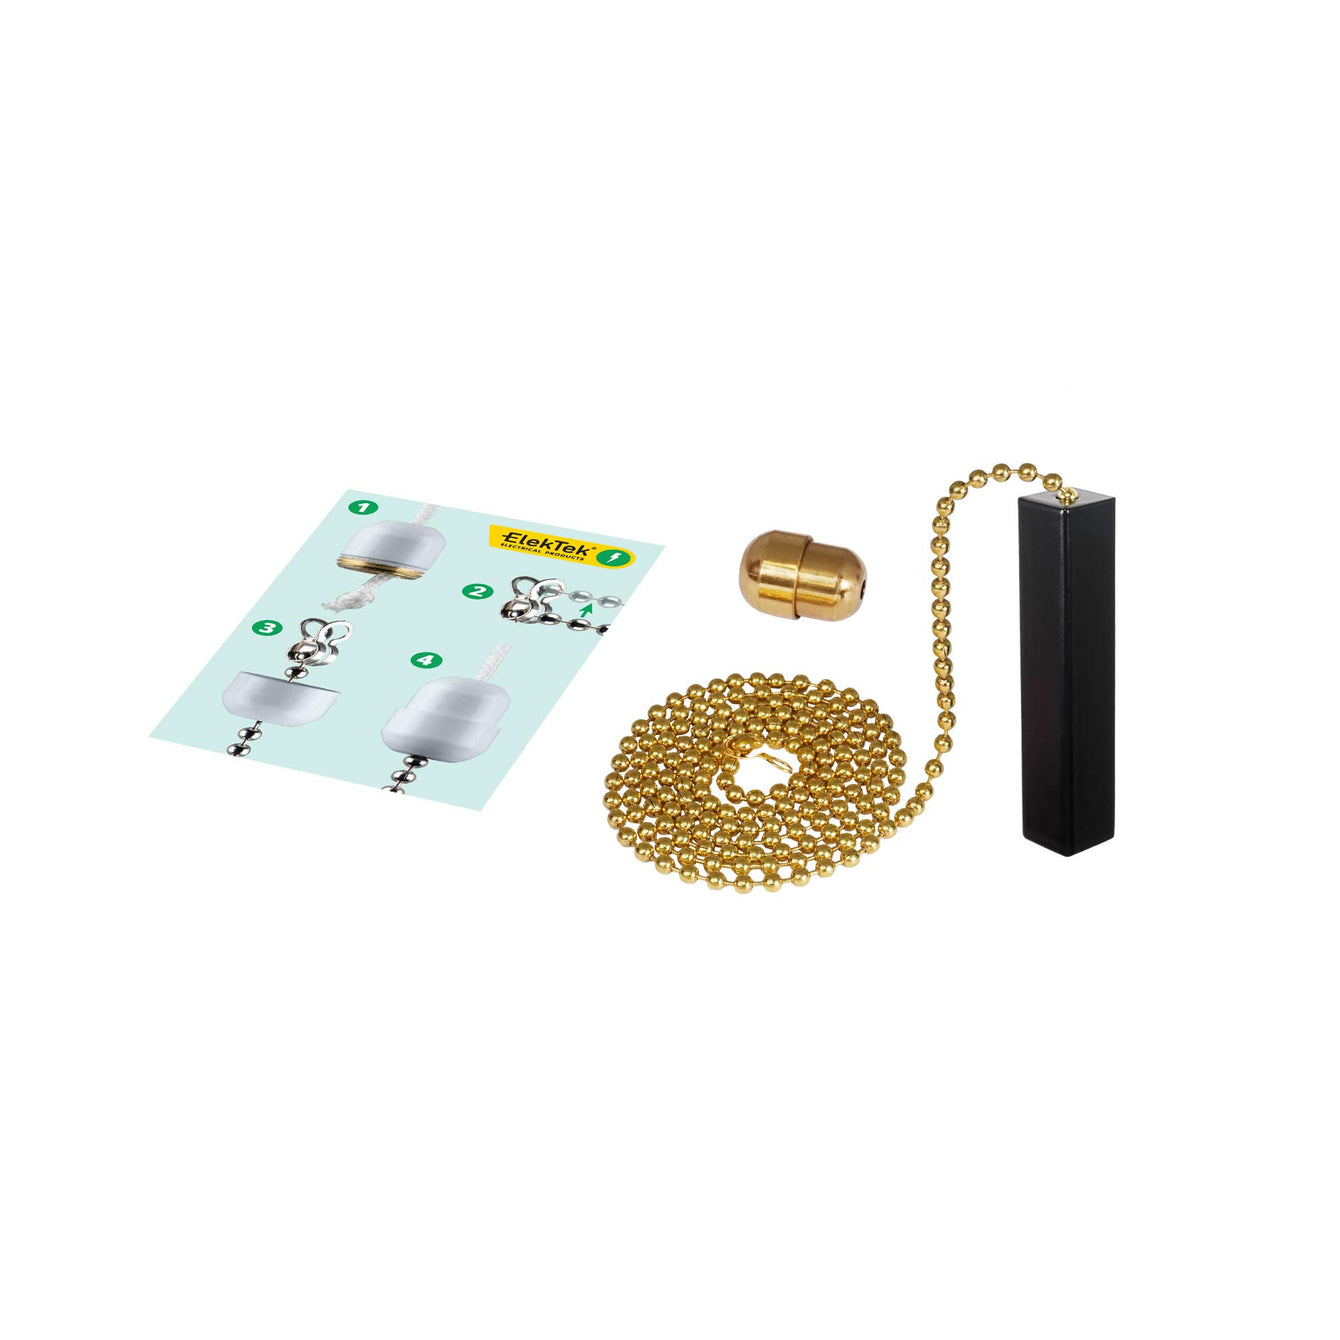 ElekTek Premium Black Bathroom Light Pull Cord Switch Kit with Pull Chain Handle Black Crystal Ball / Chrome